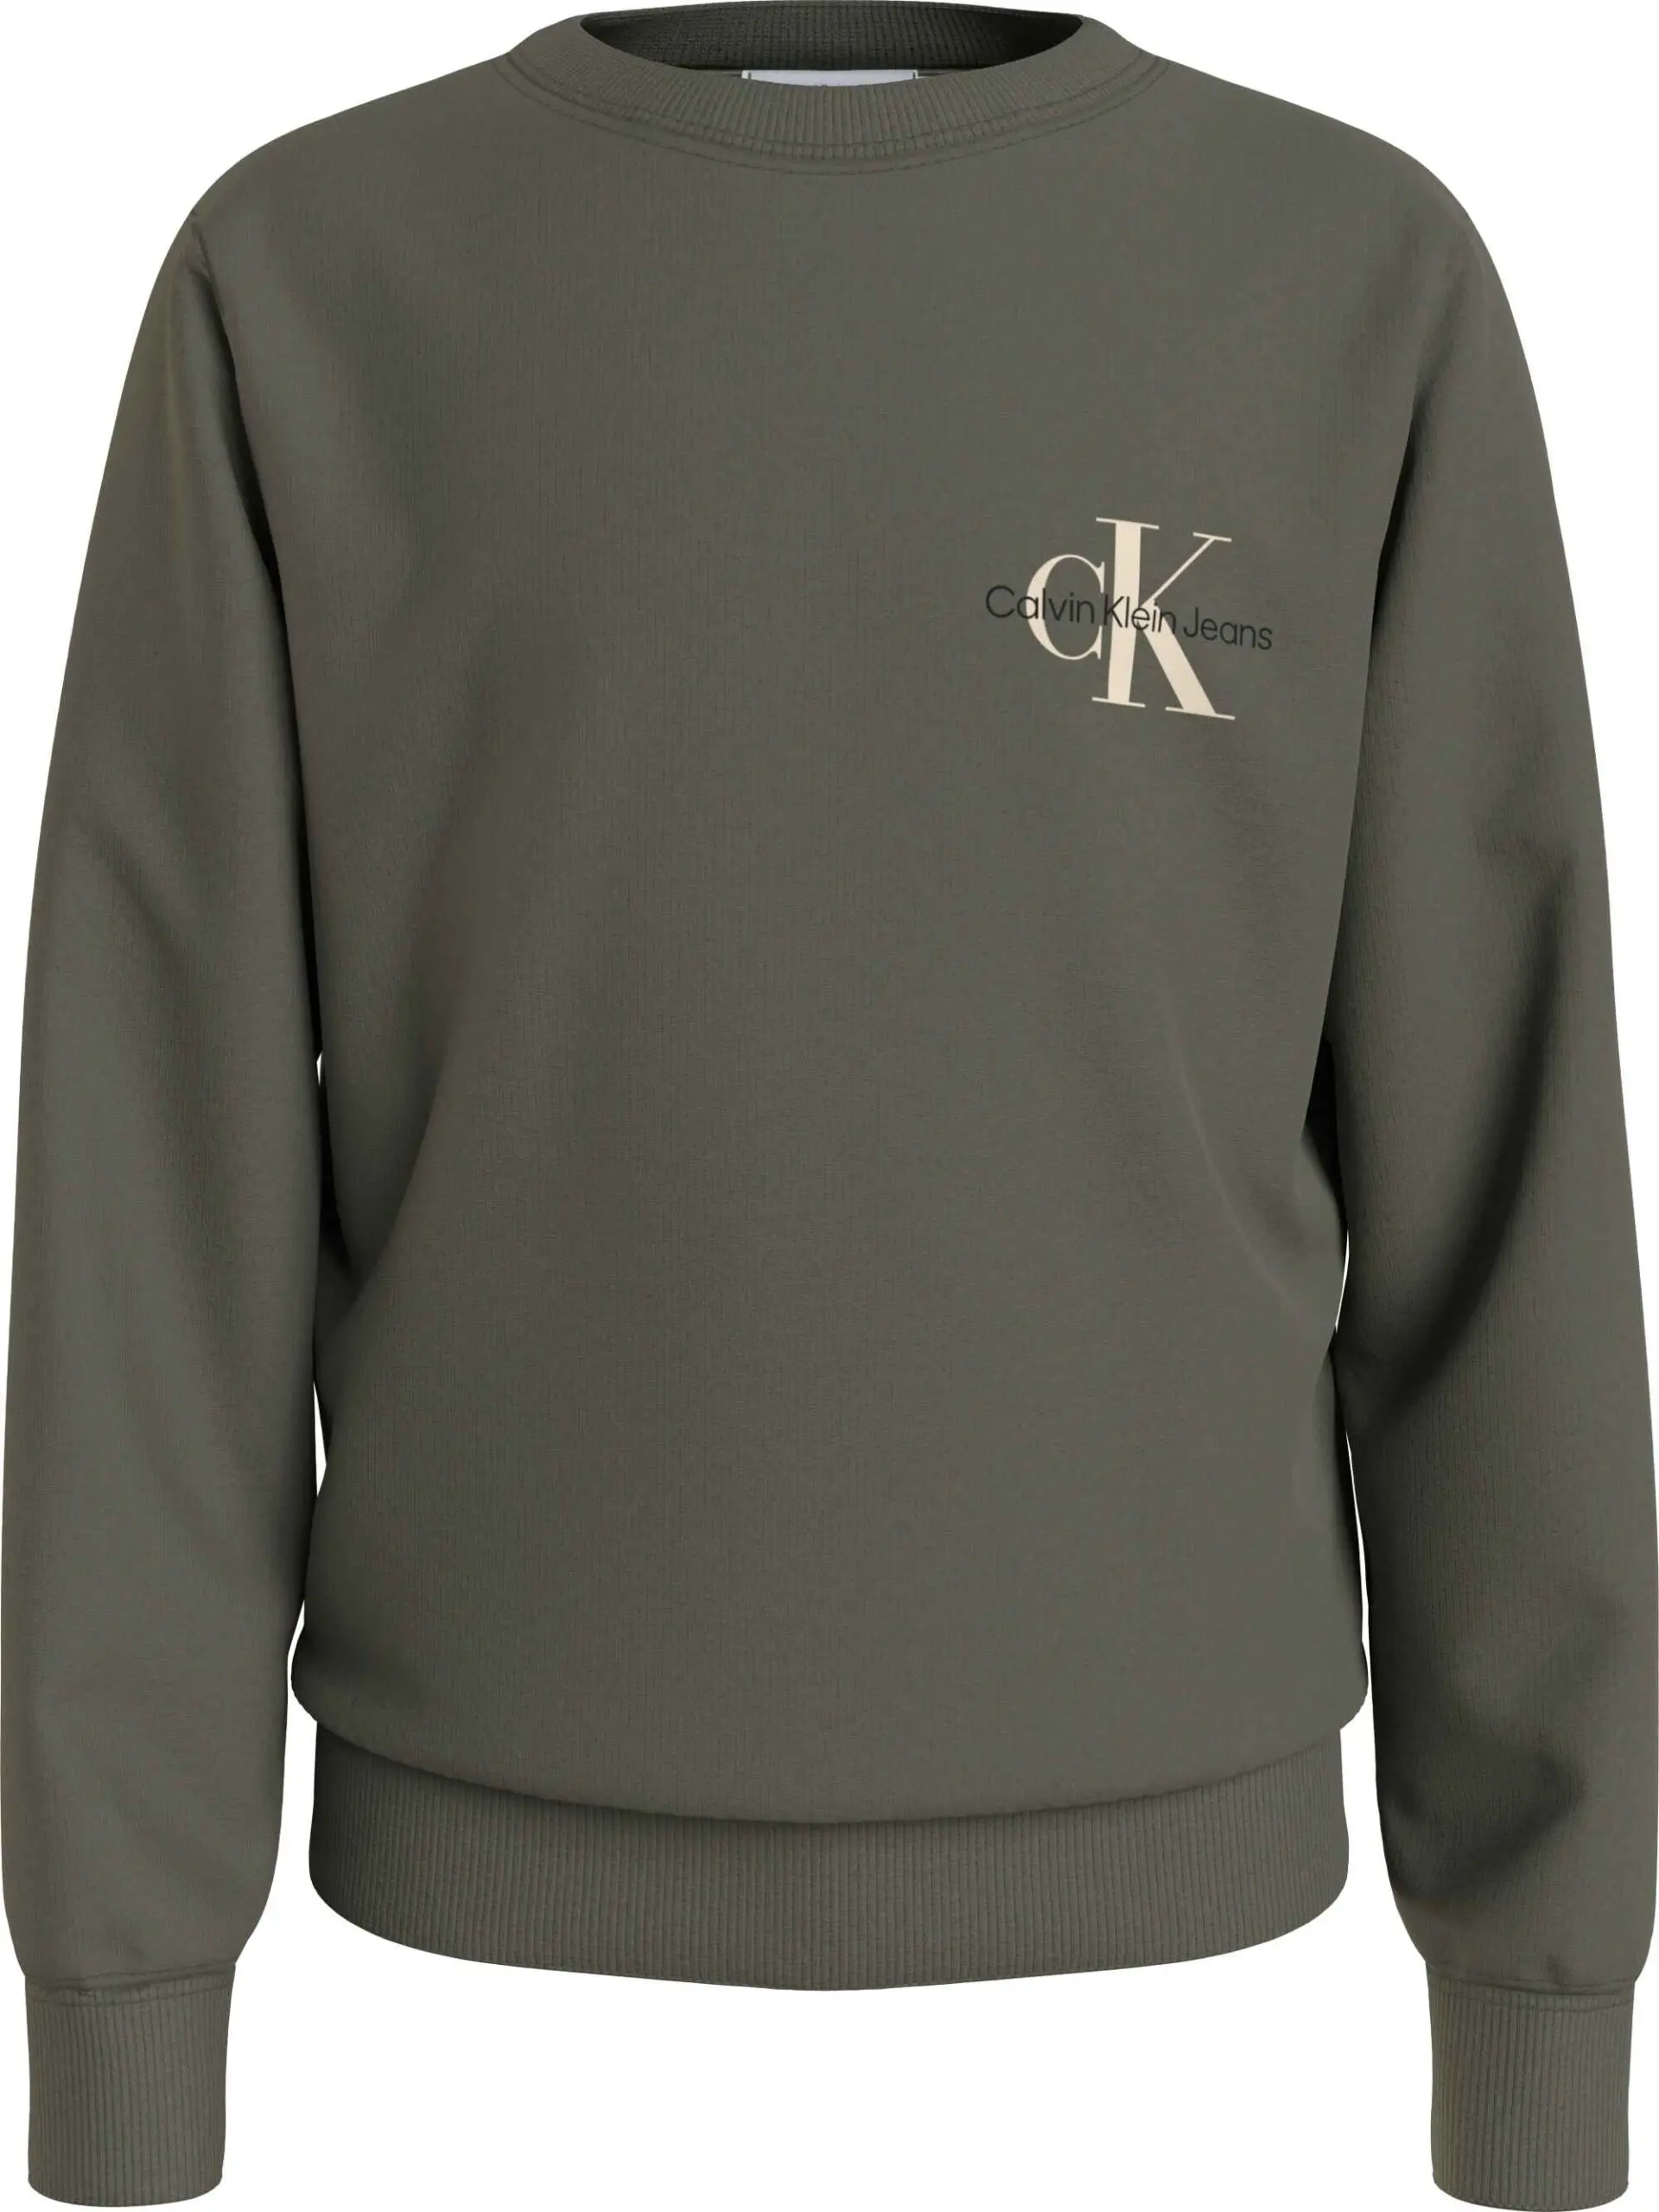 Calvin Klein - Seeds CN IU0IU00397LDY Sweatshirt Monogram Hjoerring LDY Sweatshirt